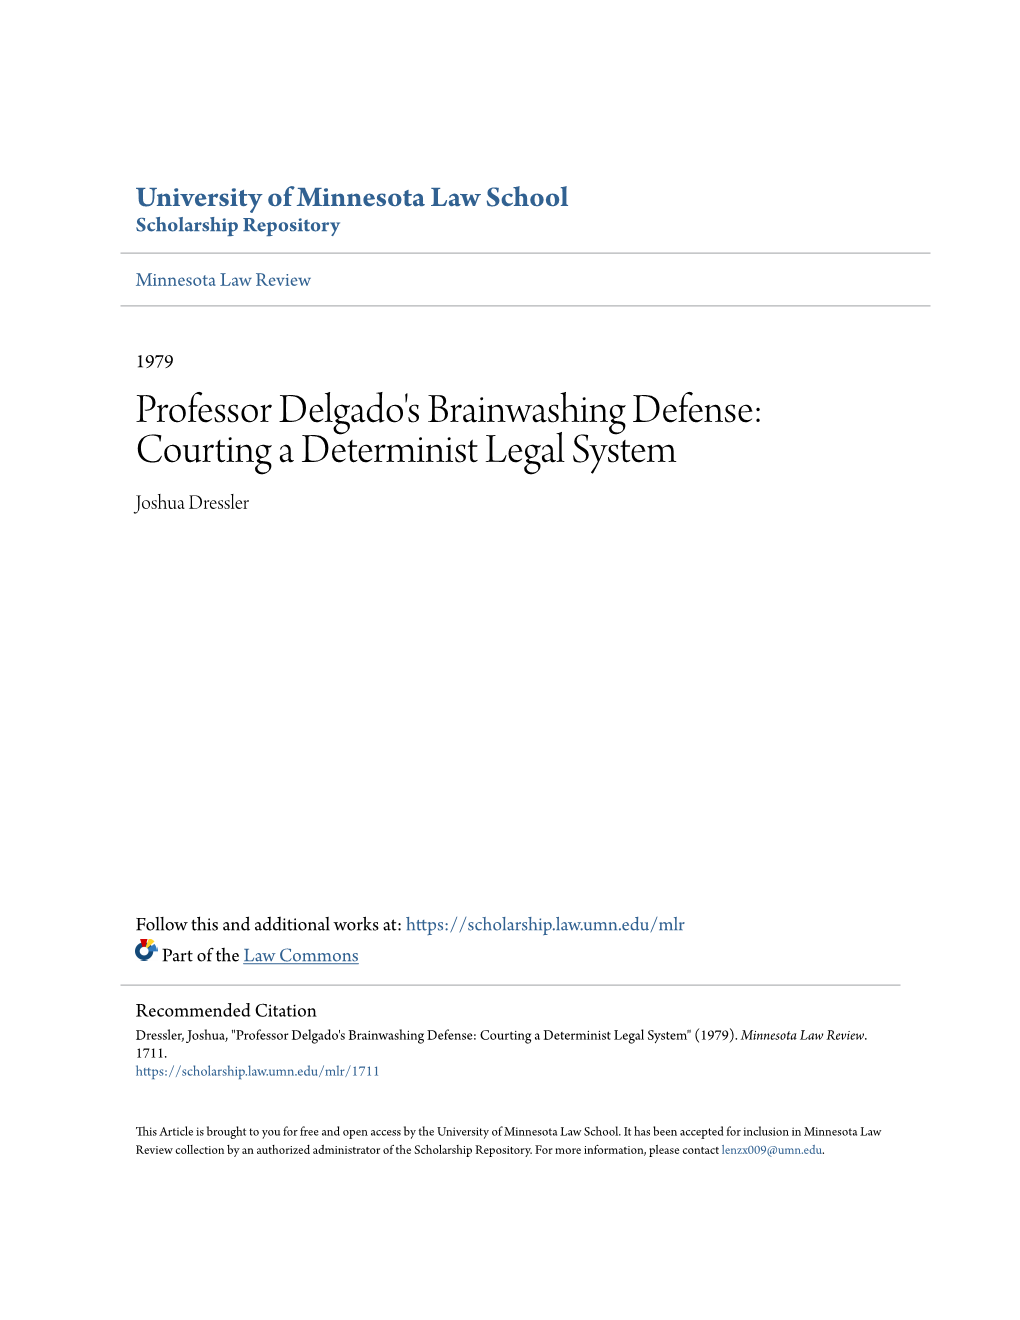 Professor Delgado's Brainwashing Defense: Courting a Determinist Legal System Joshua Dressler